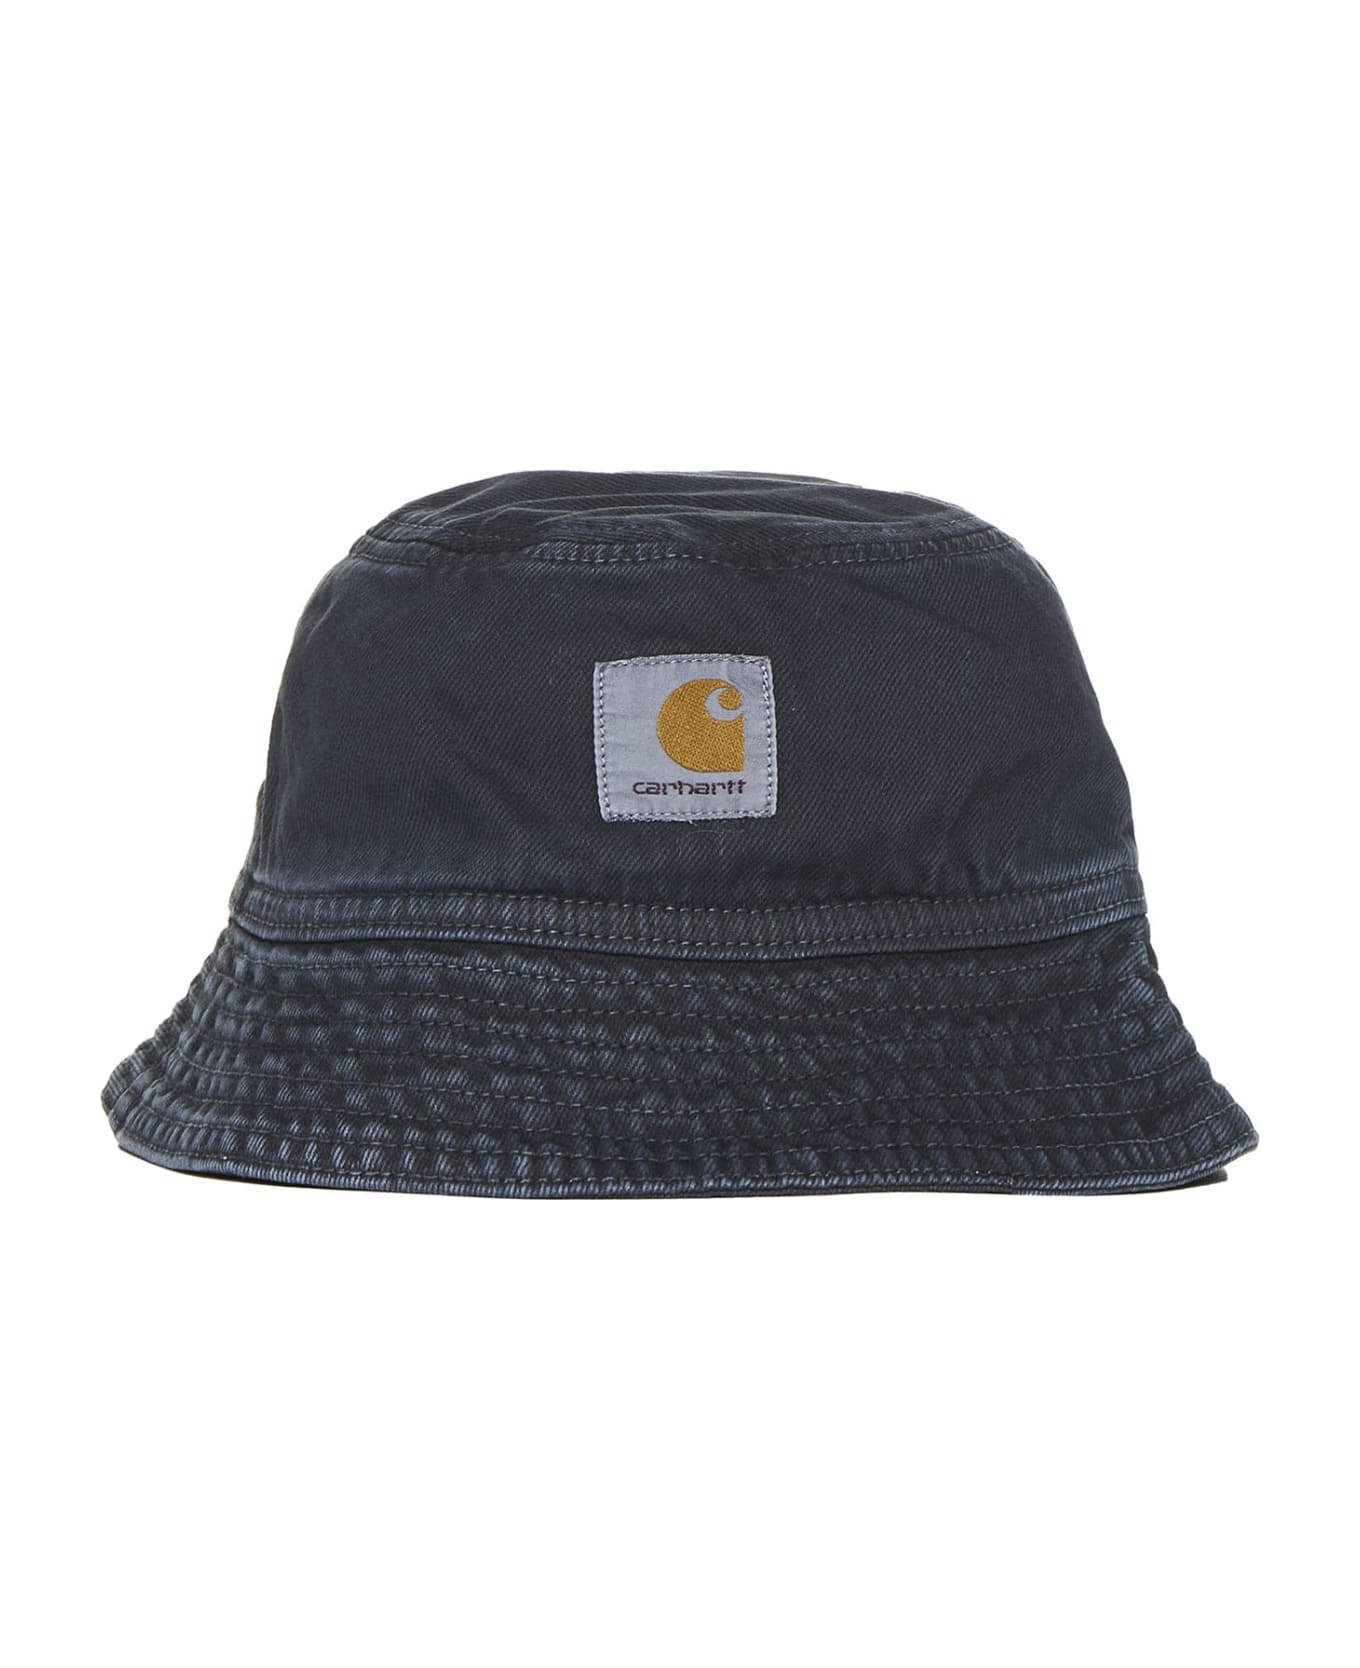 Carhartt Hat - Black stone dyed